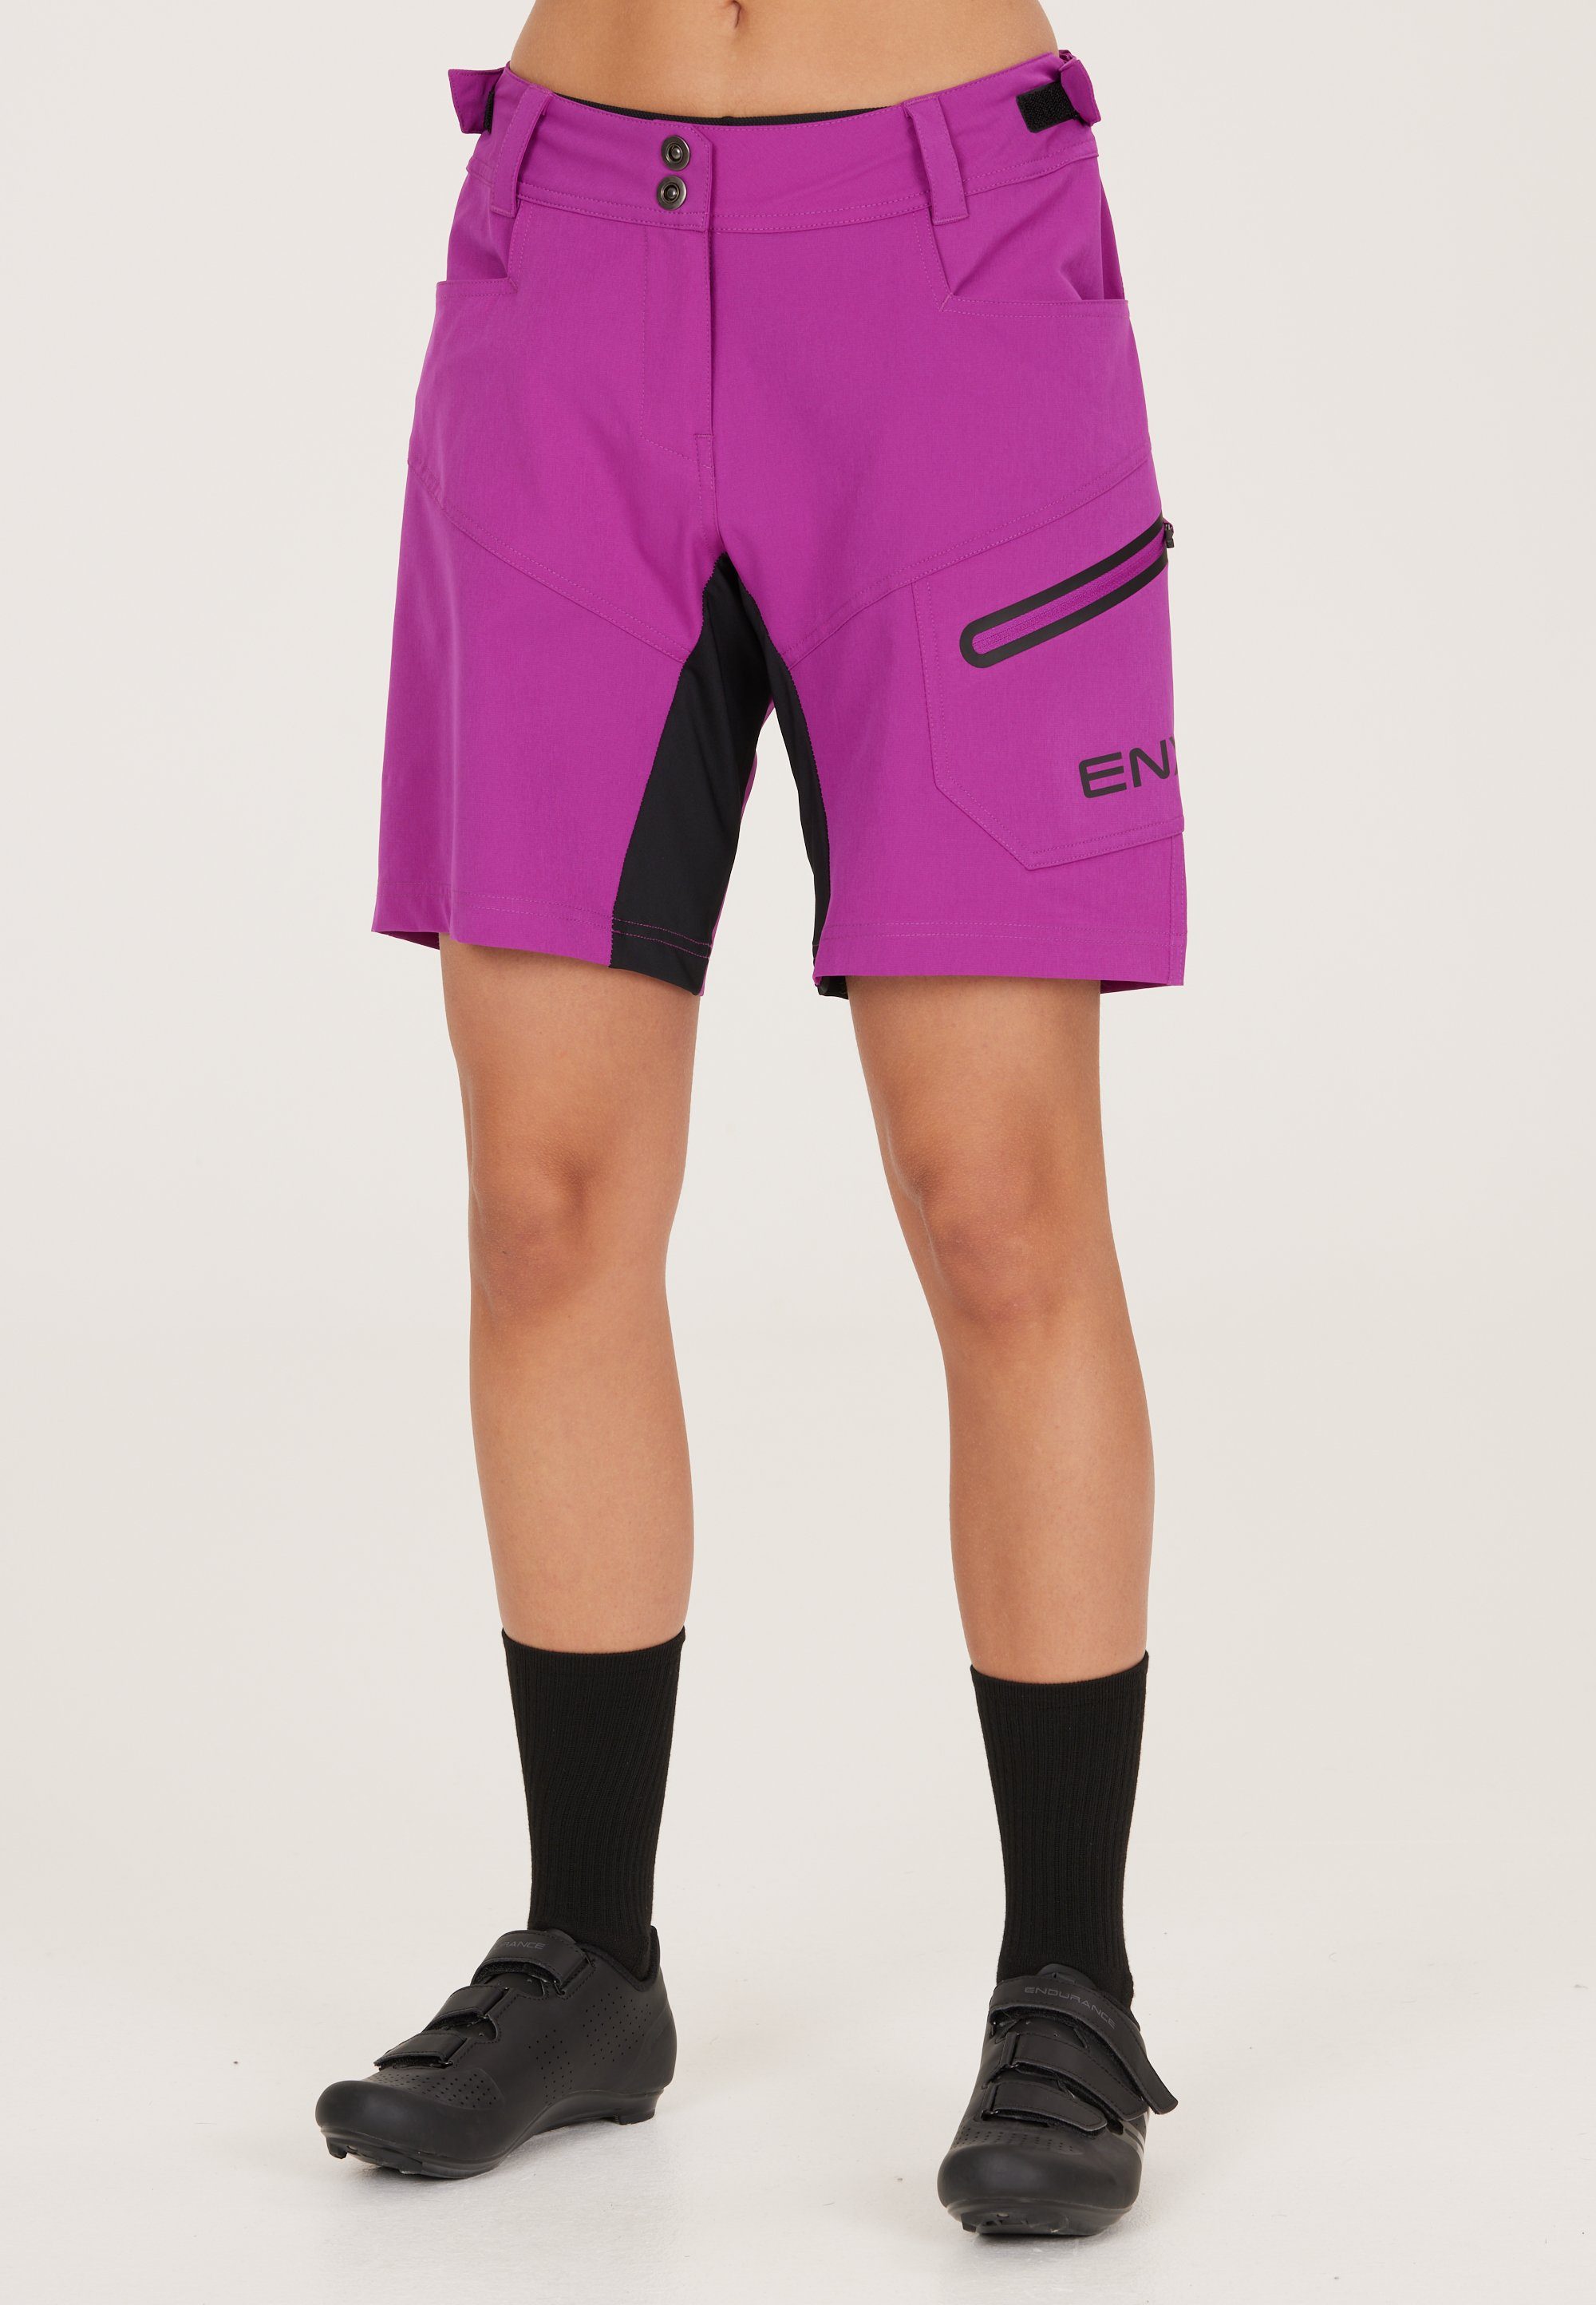 ENDURANCE Radhose Jamilla W 2 in 1 Shorts mit herausnehmbarer Innen-Tights lila